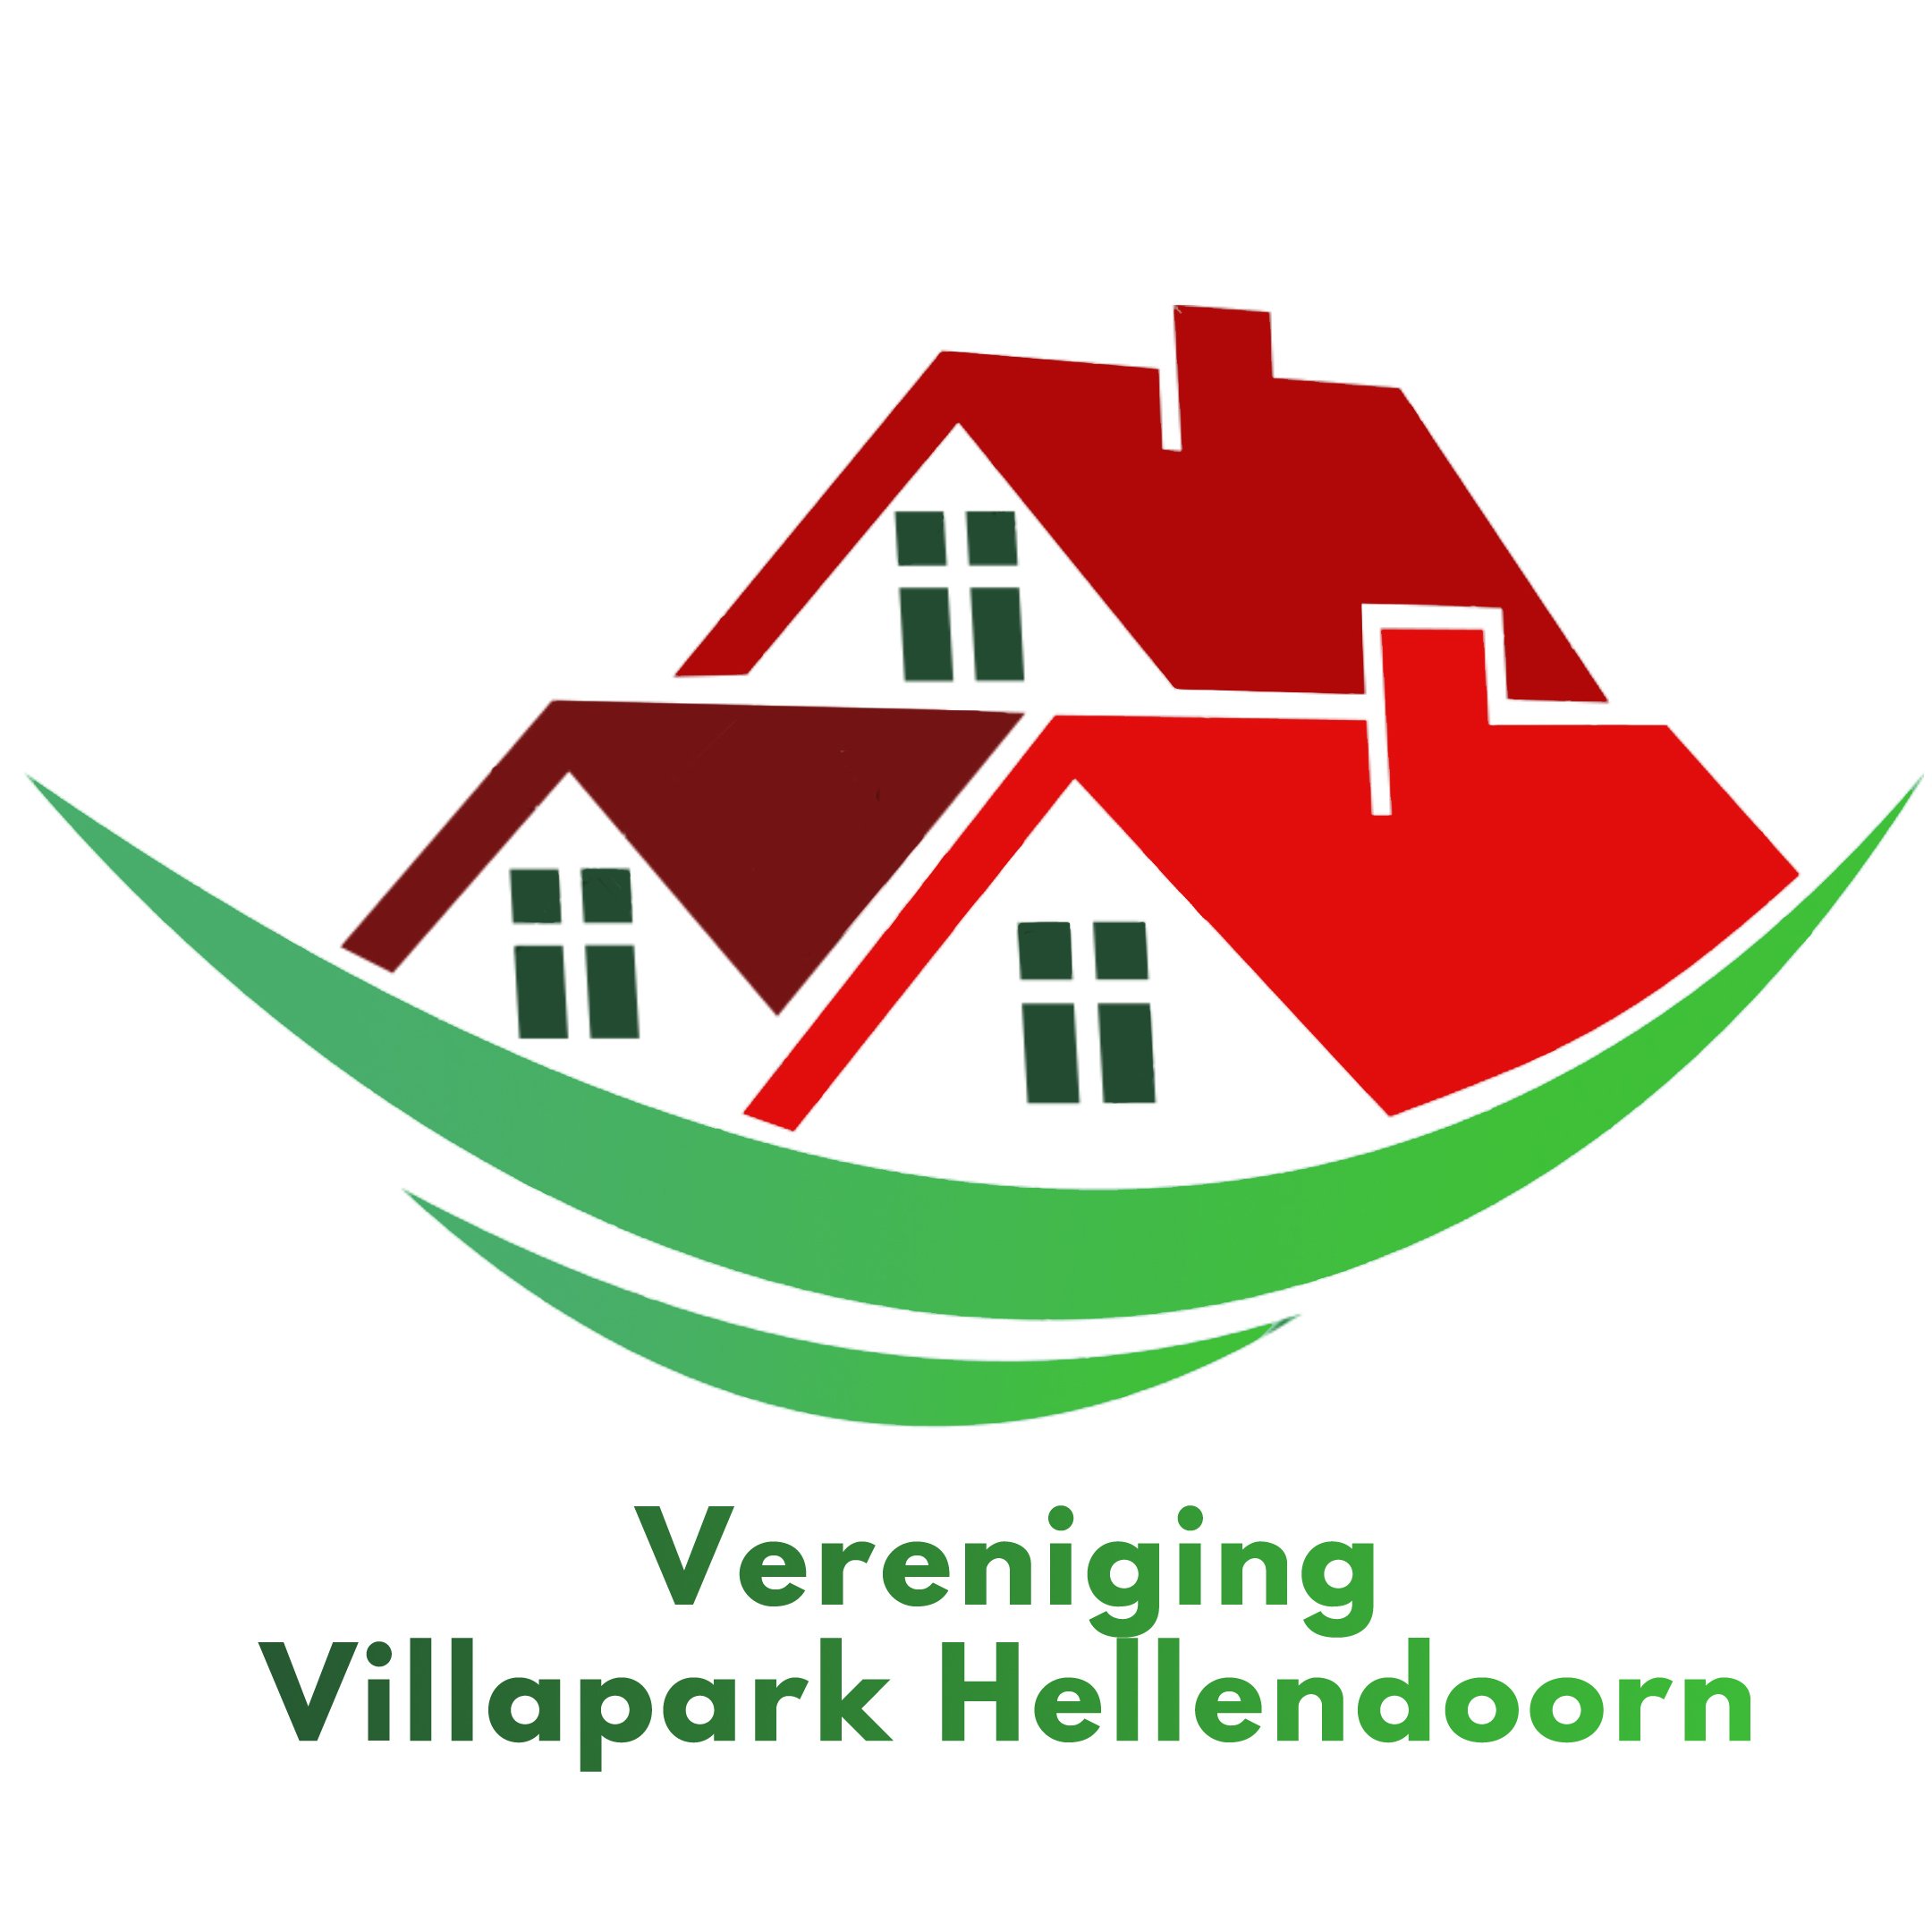 (c) Villaparkhellendoorn.nl